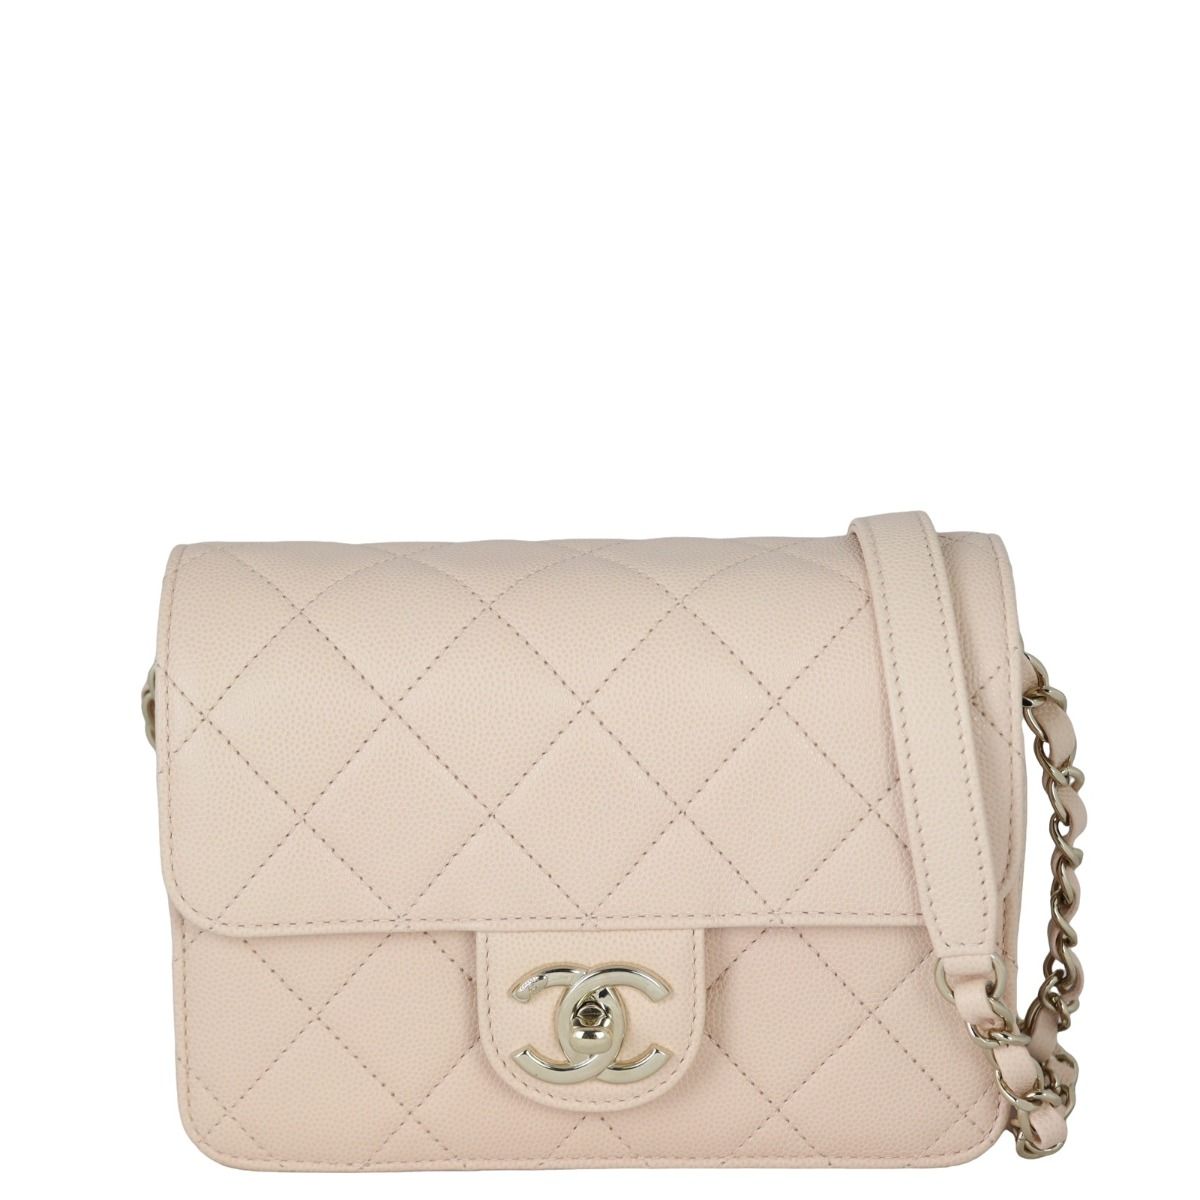 Chanel Like a Wallet Mini Flap Bag